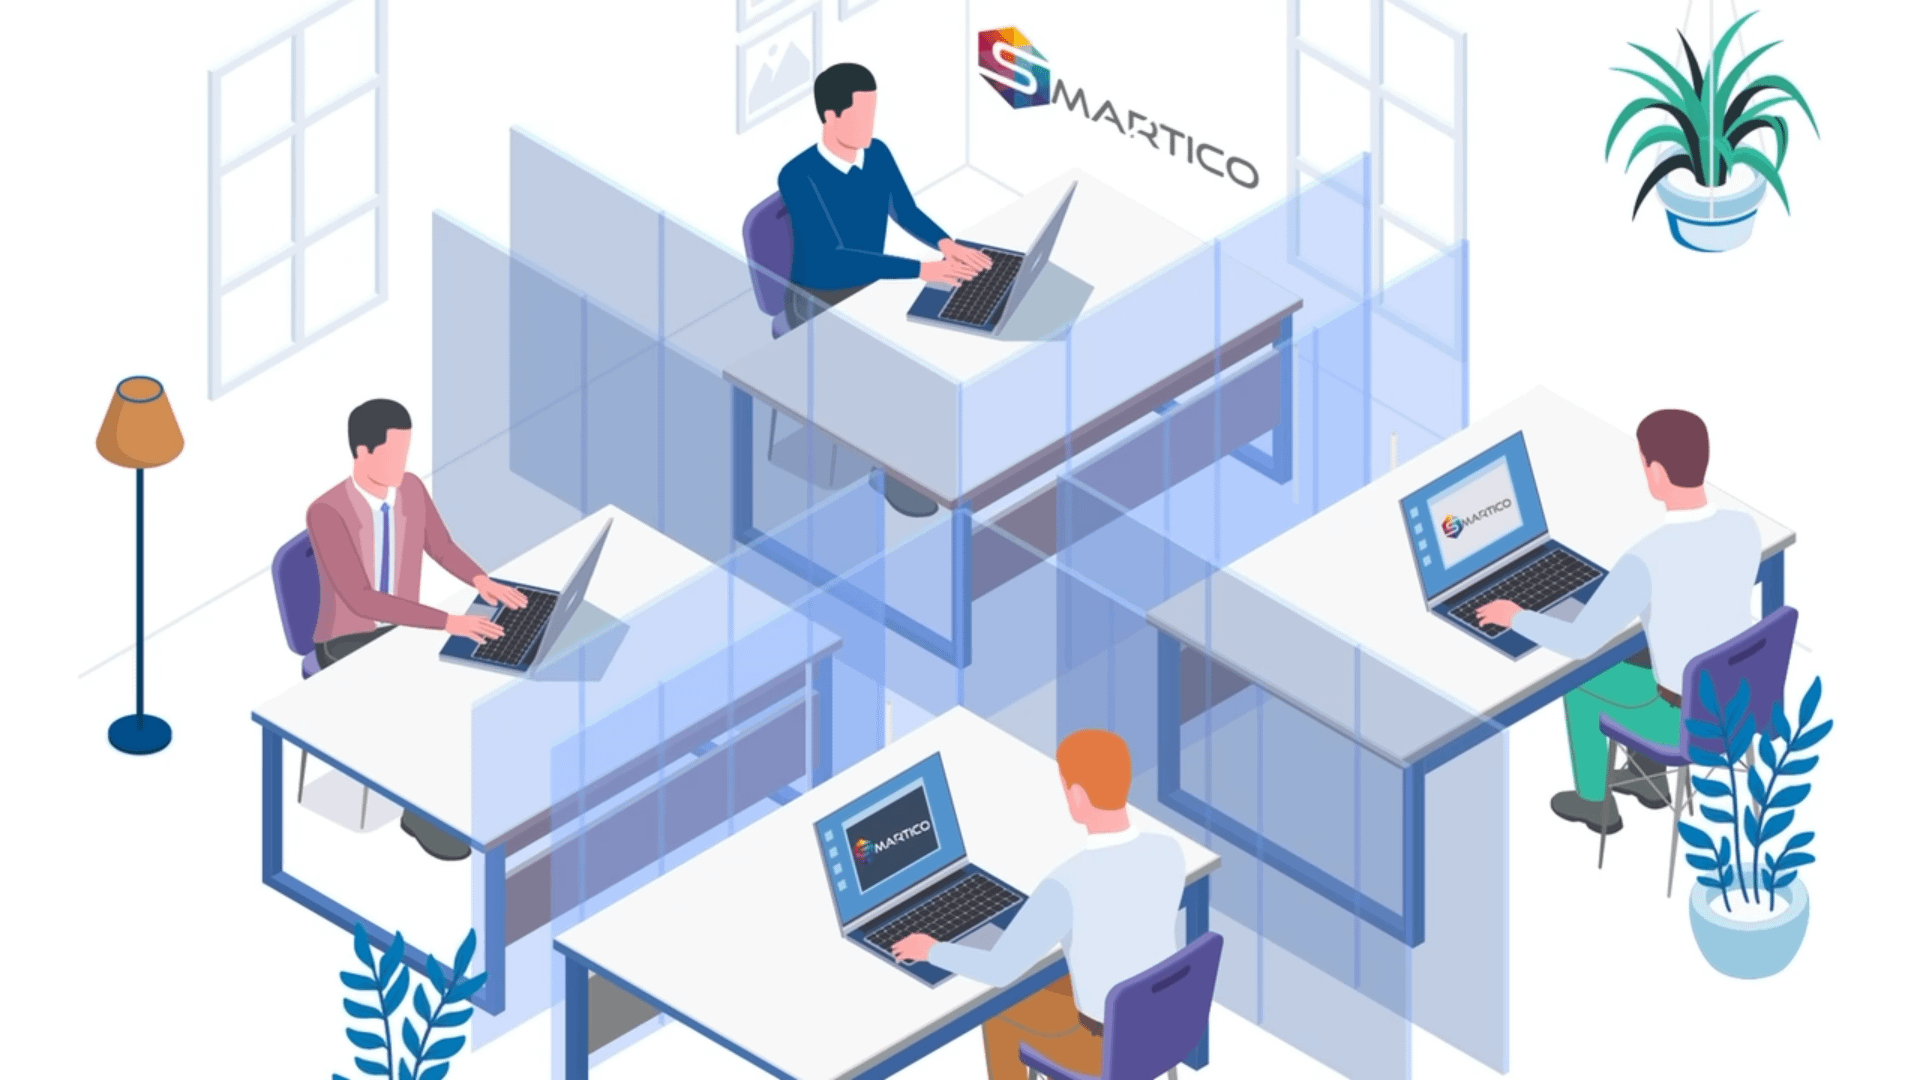 Smartico 1 - About Us